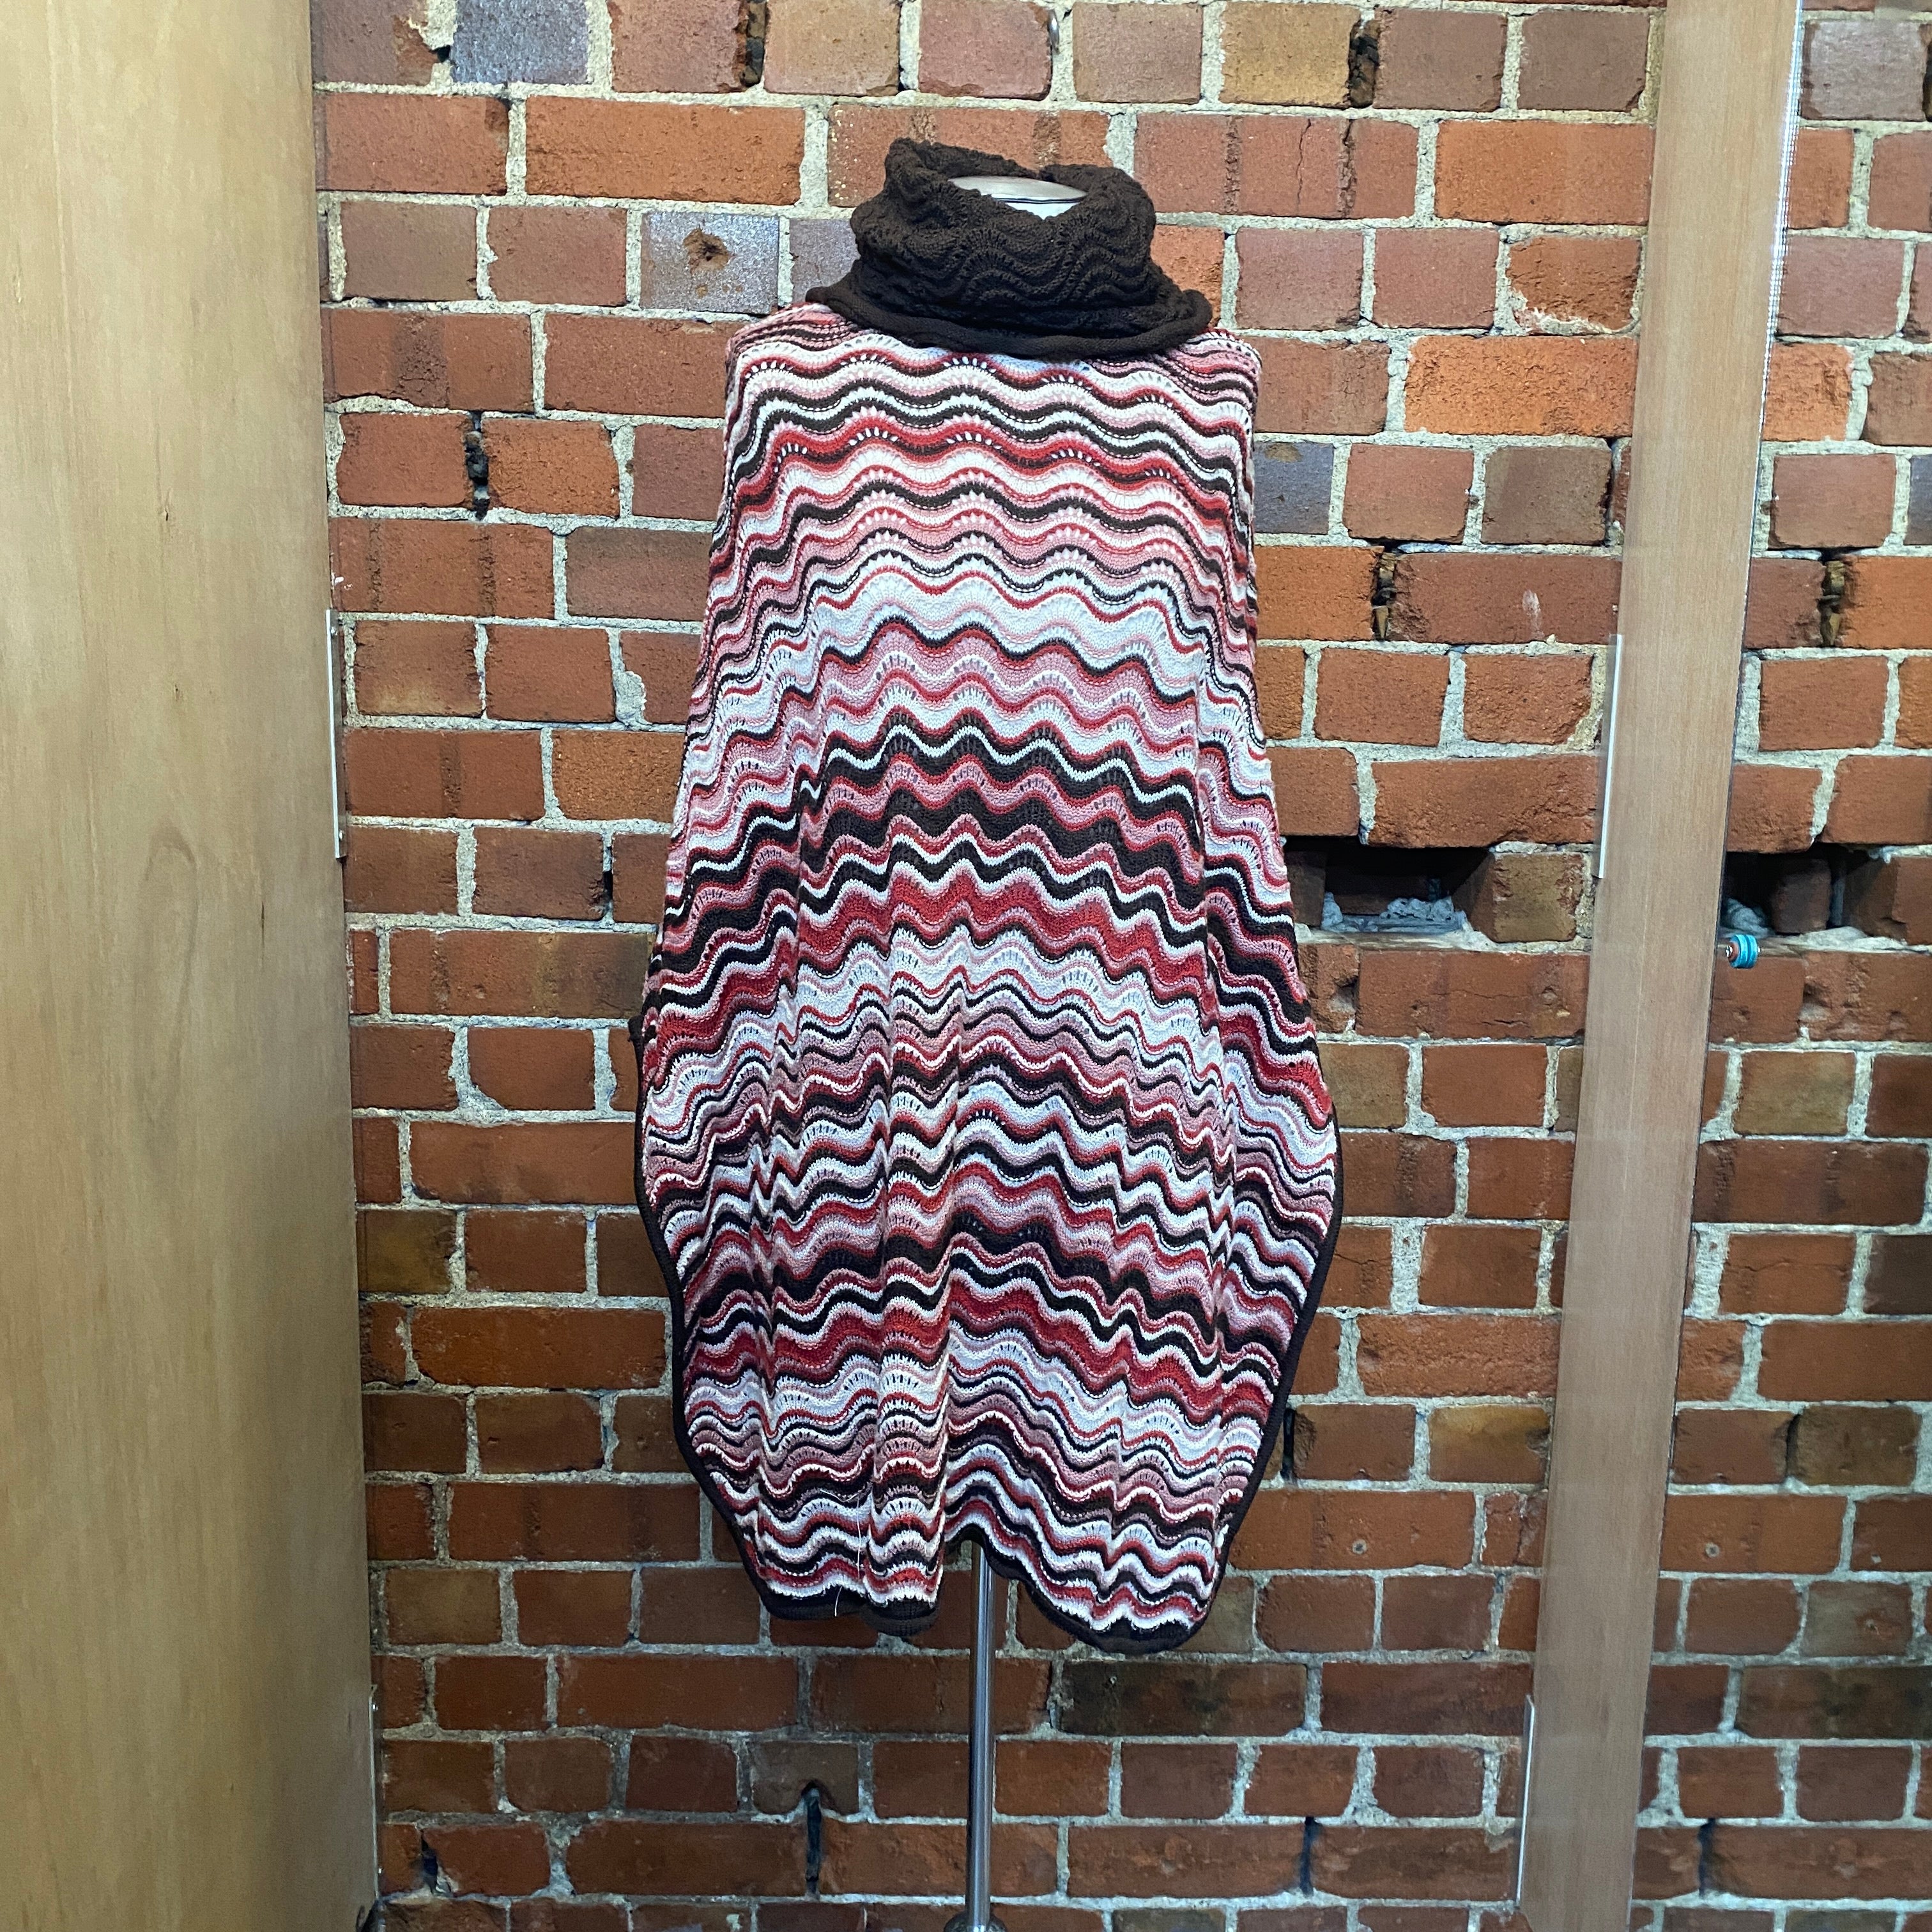 MISSONI Wool knit poncho